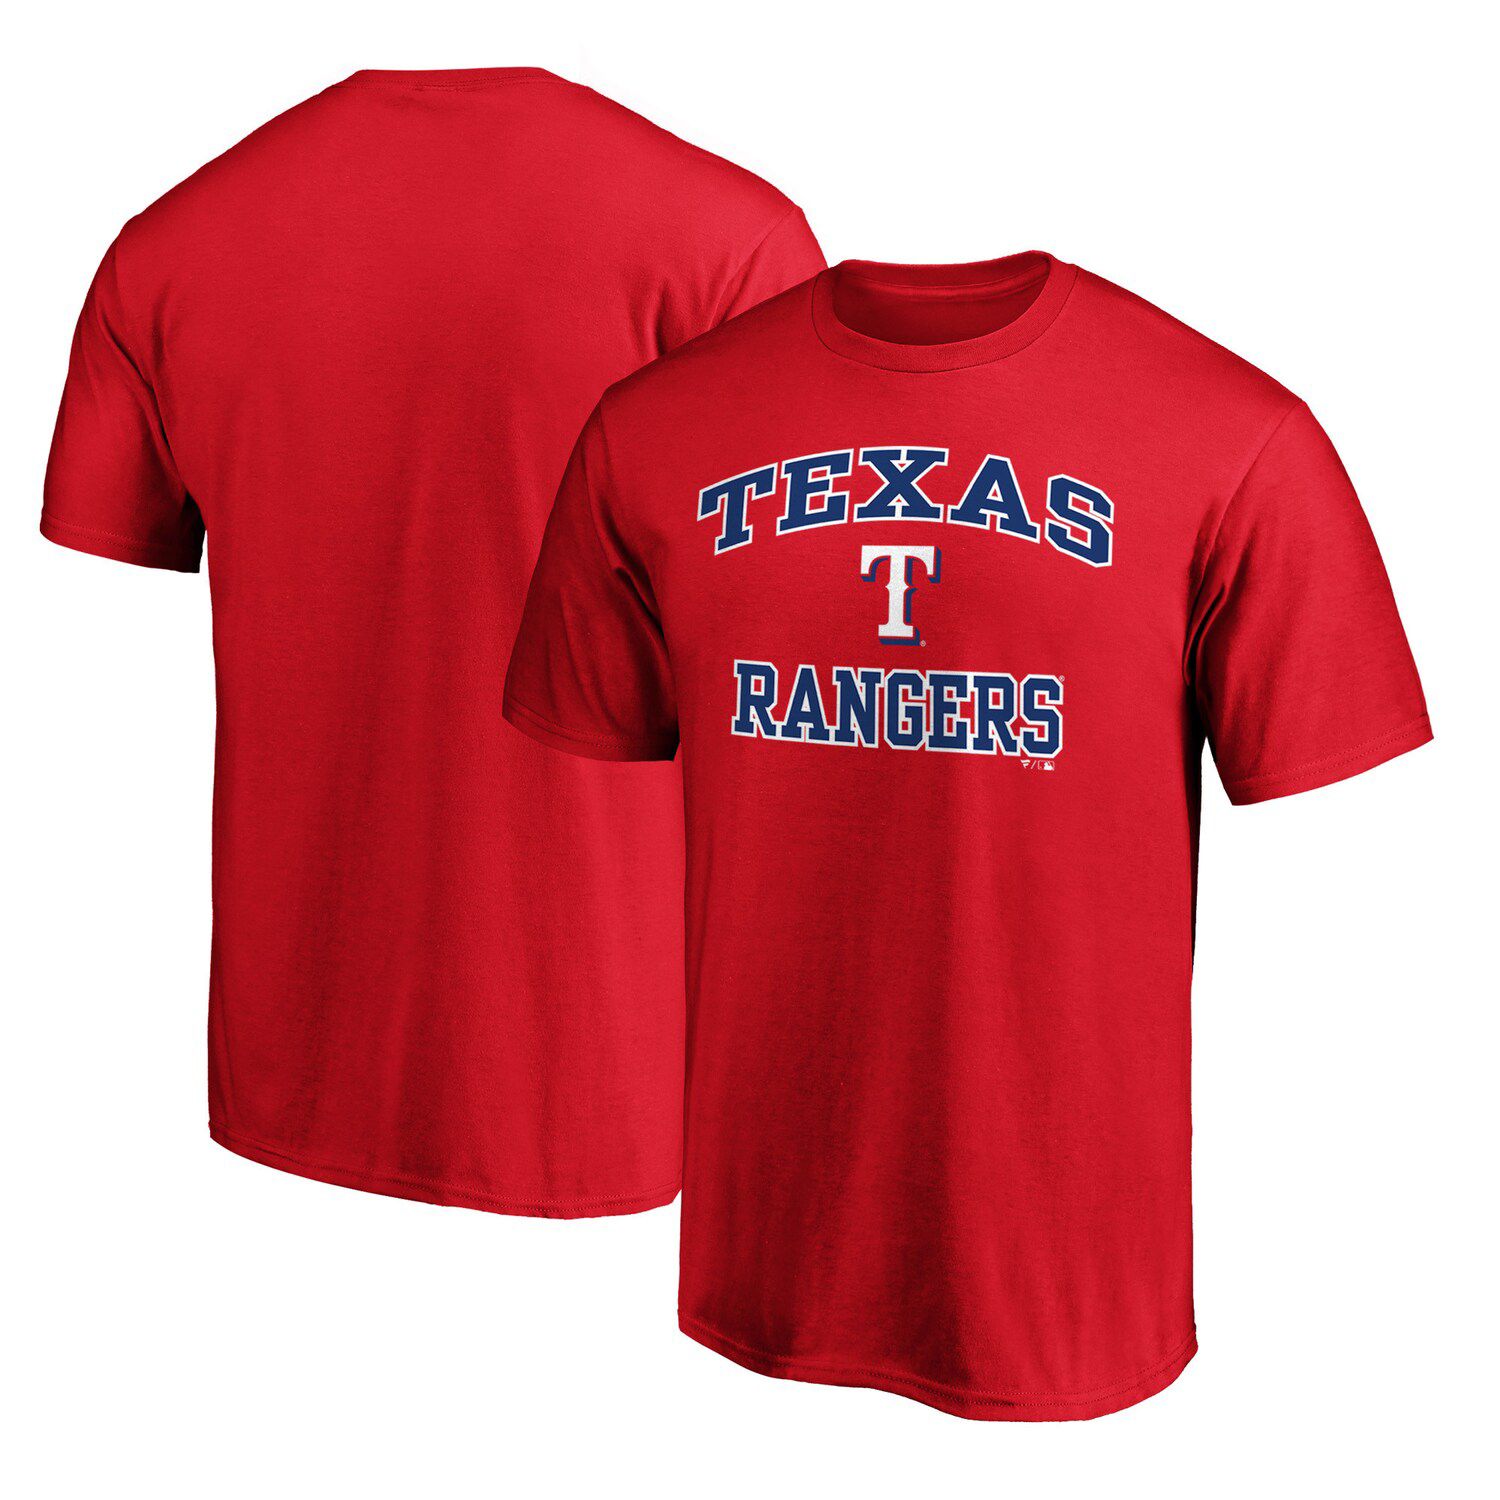 texas rangers shirts kohl's